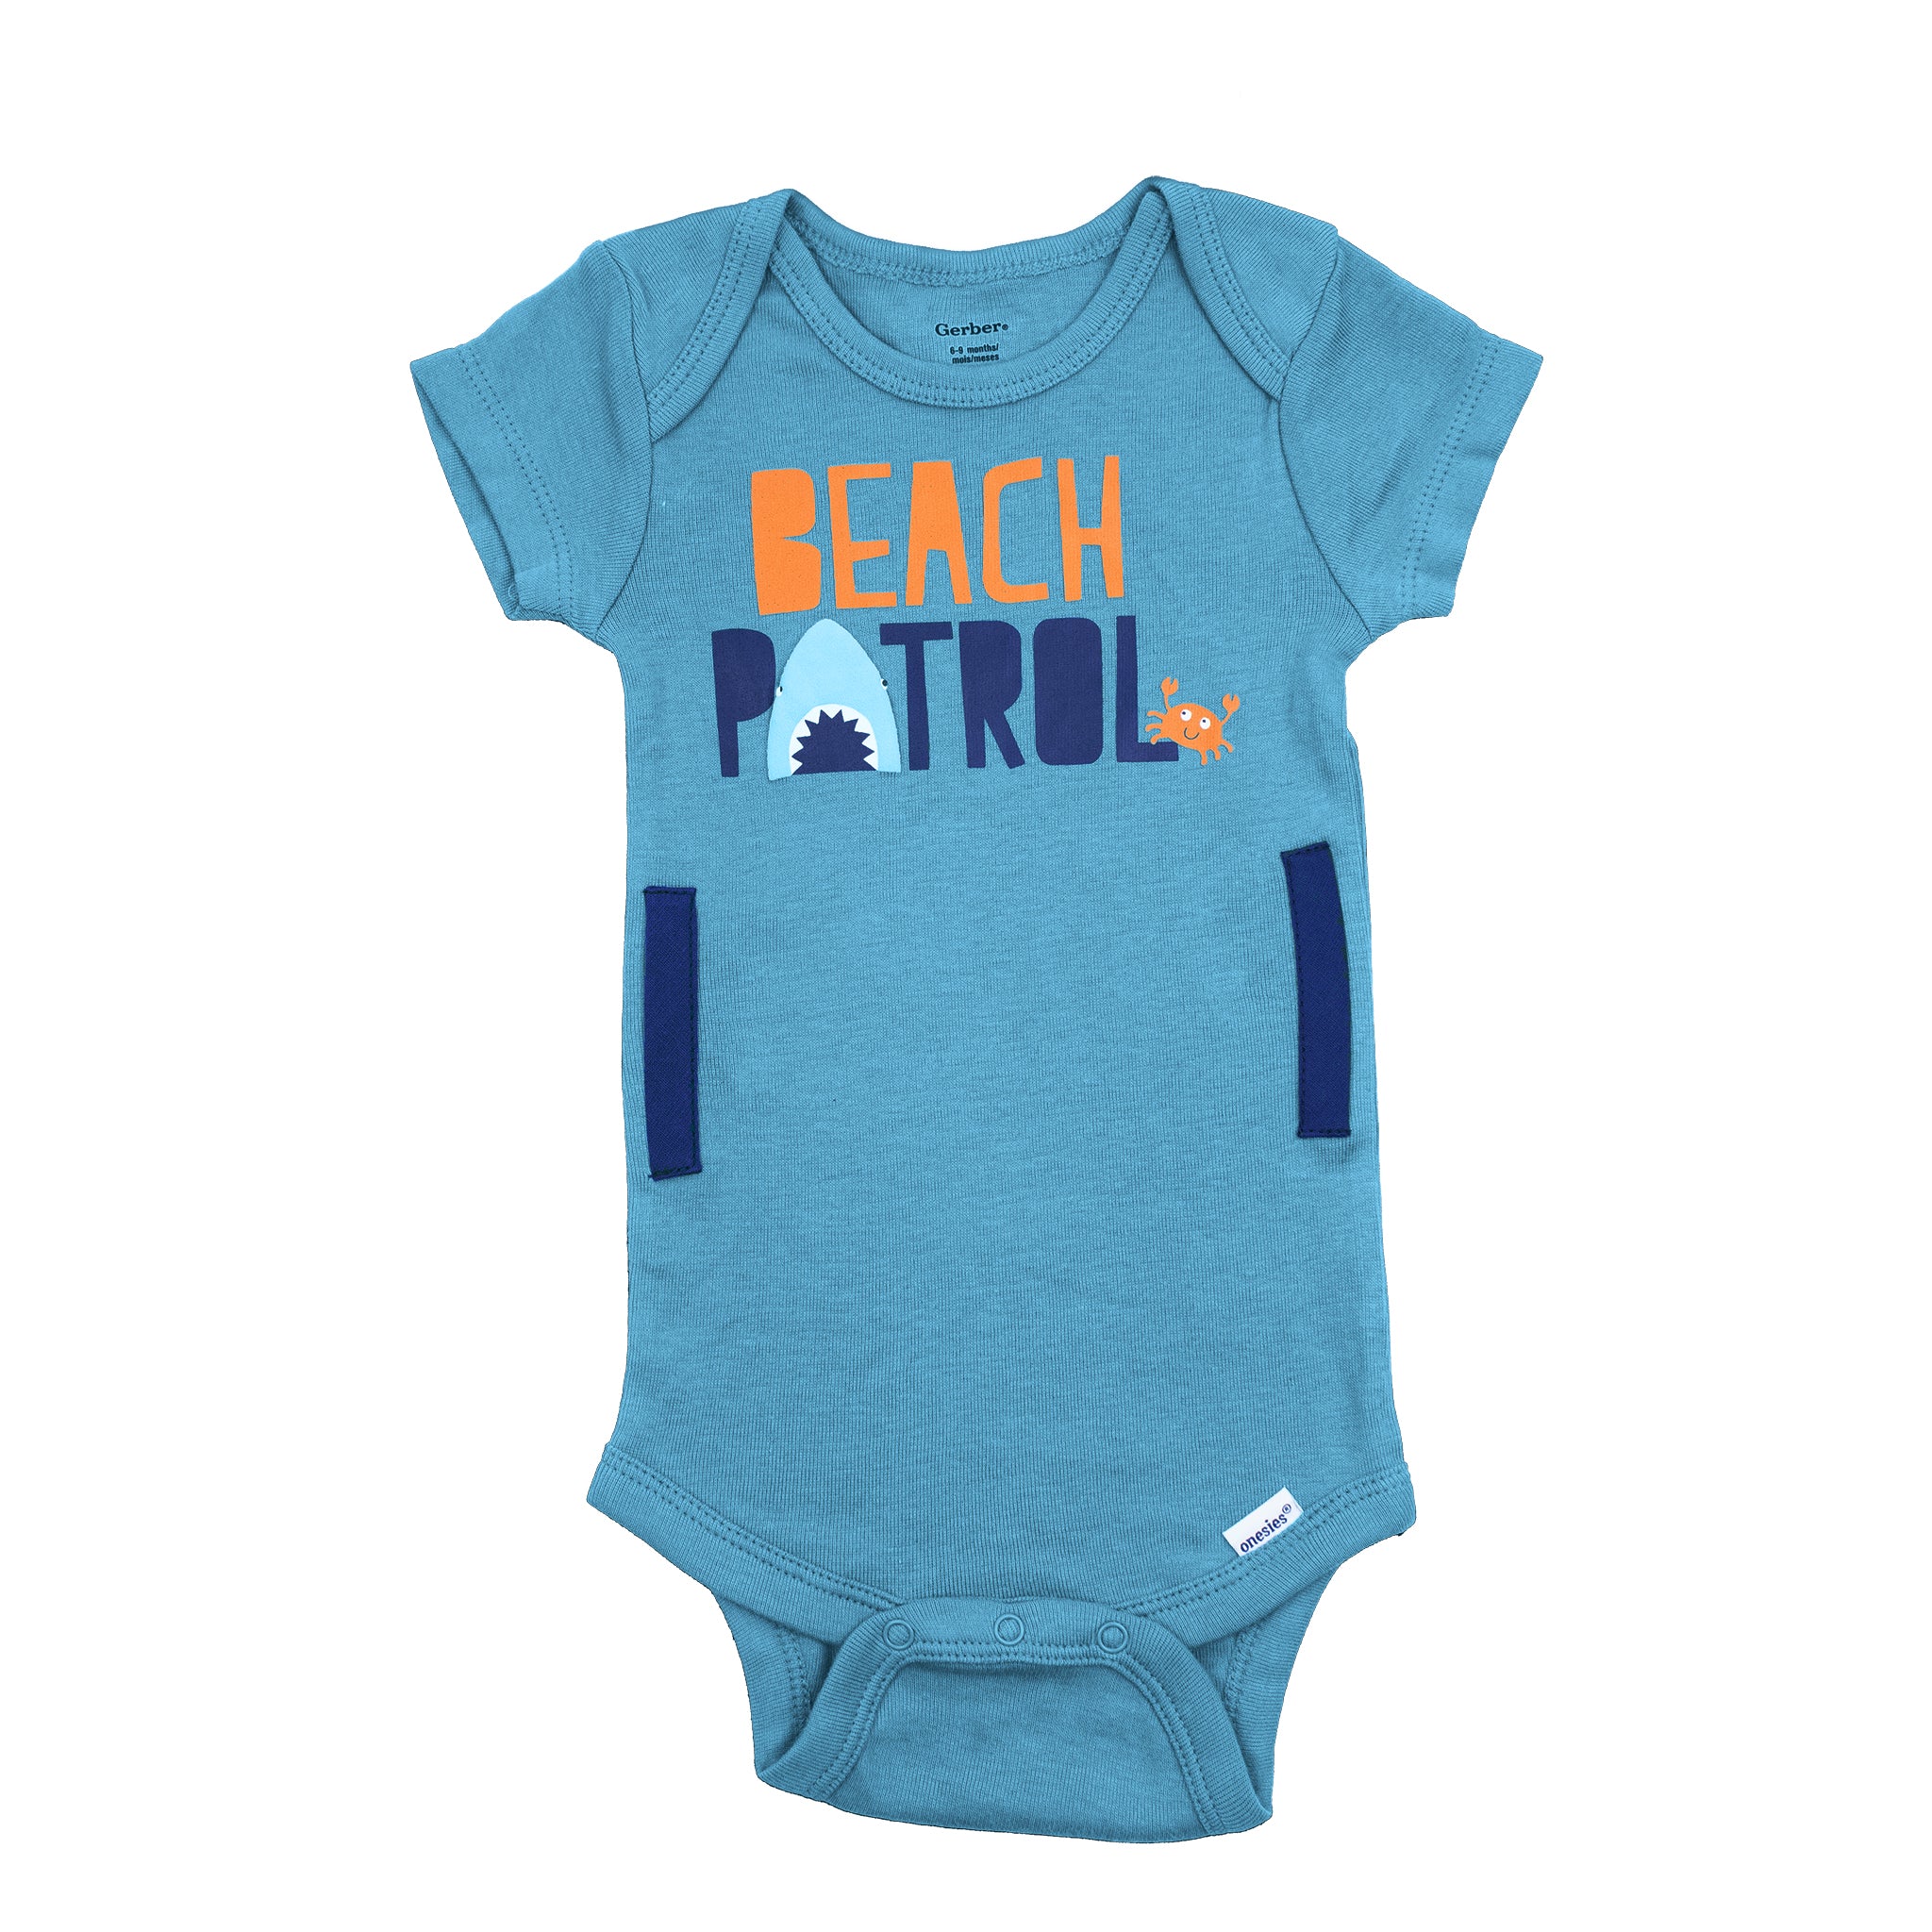 Beach Patrol G-Tube Short Sleeve Baby Onesie FINAL CLEARANCE